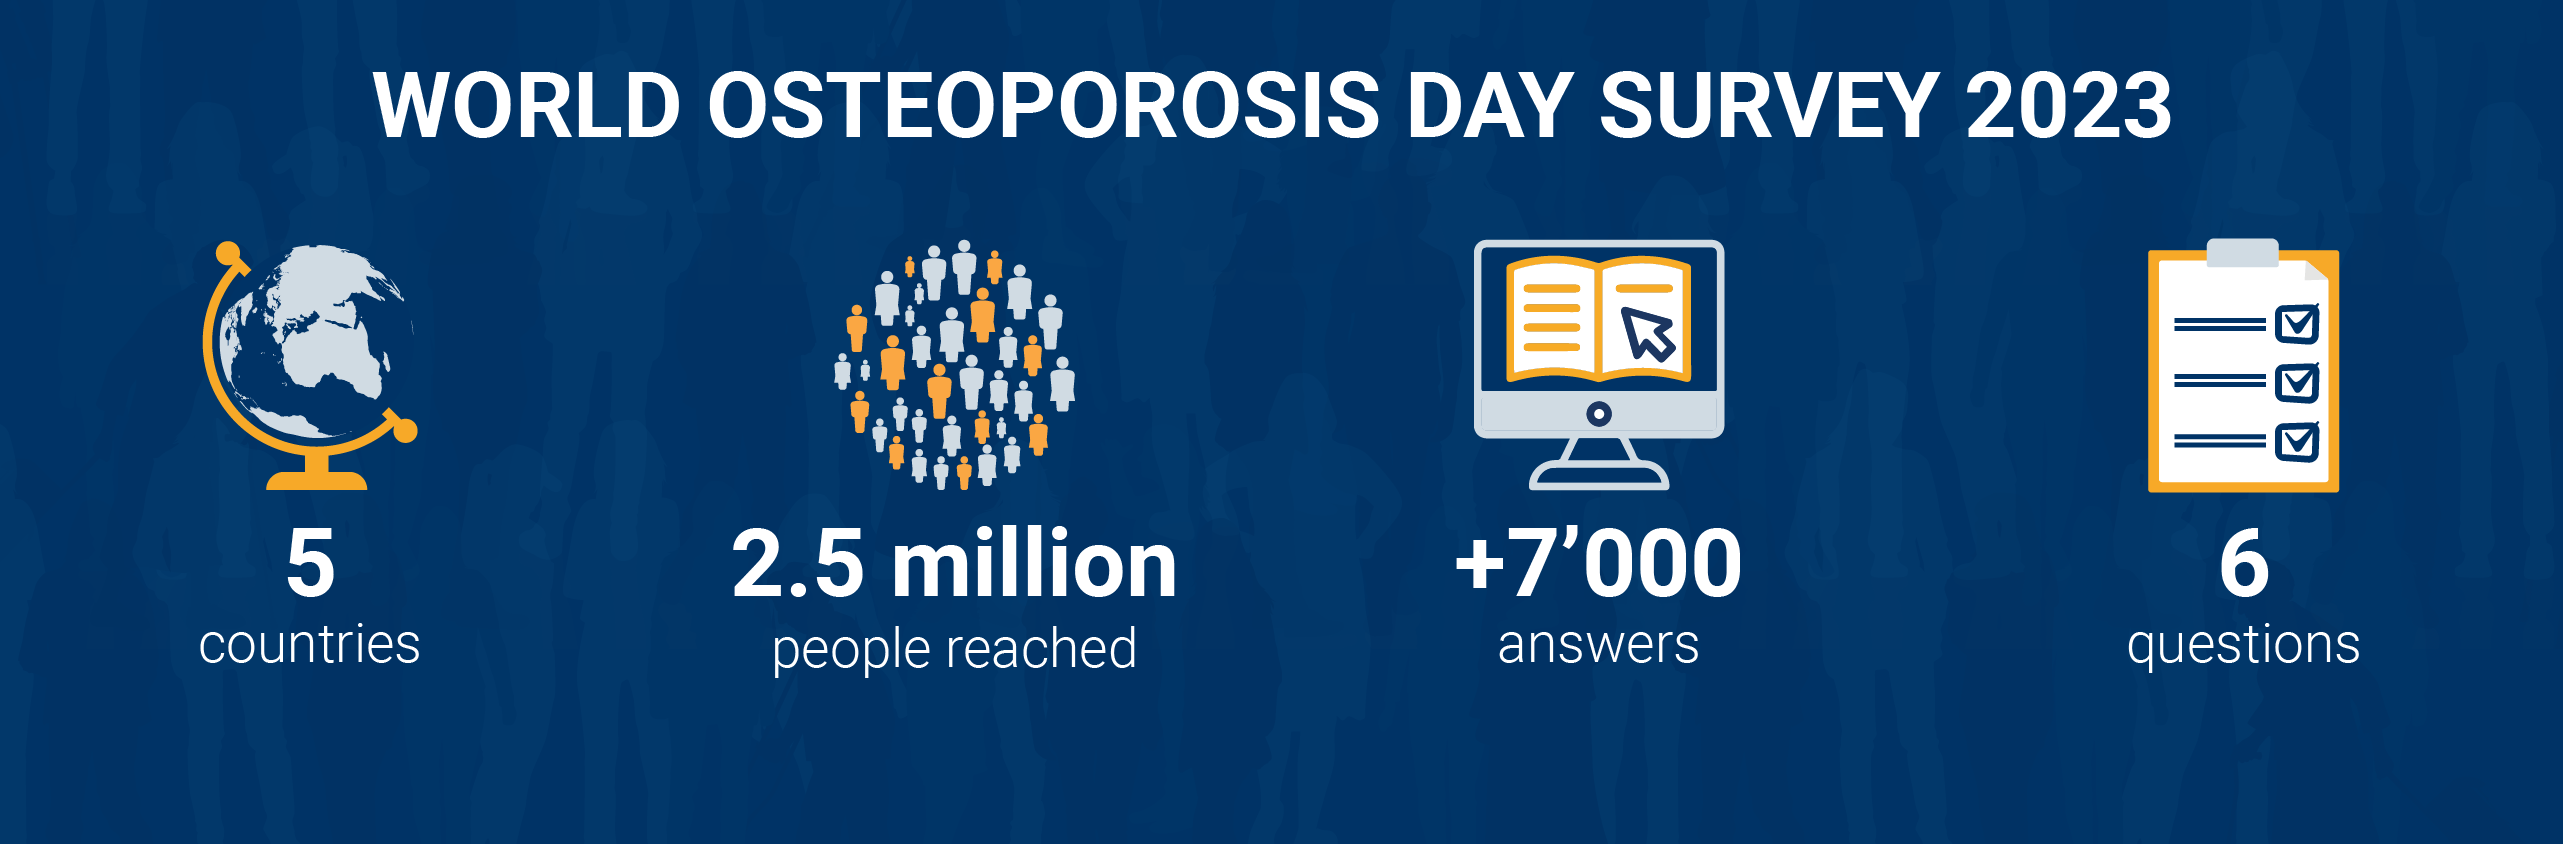 World Osteoporosis Day 2023 Survey